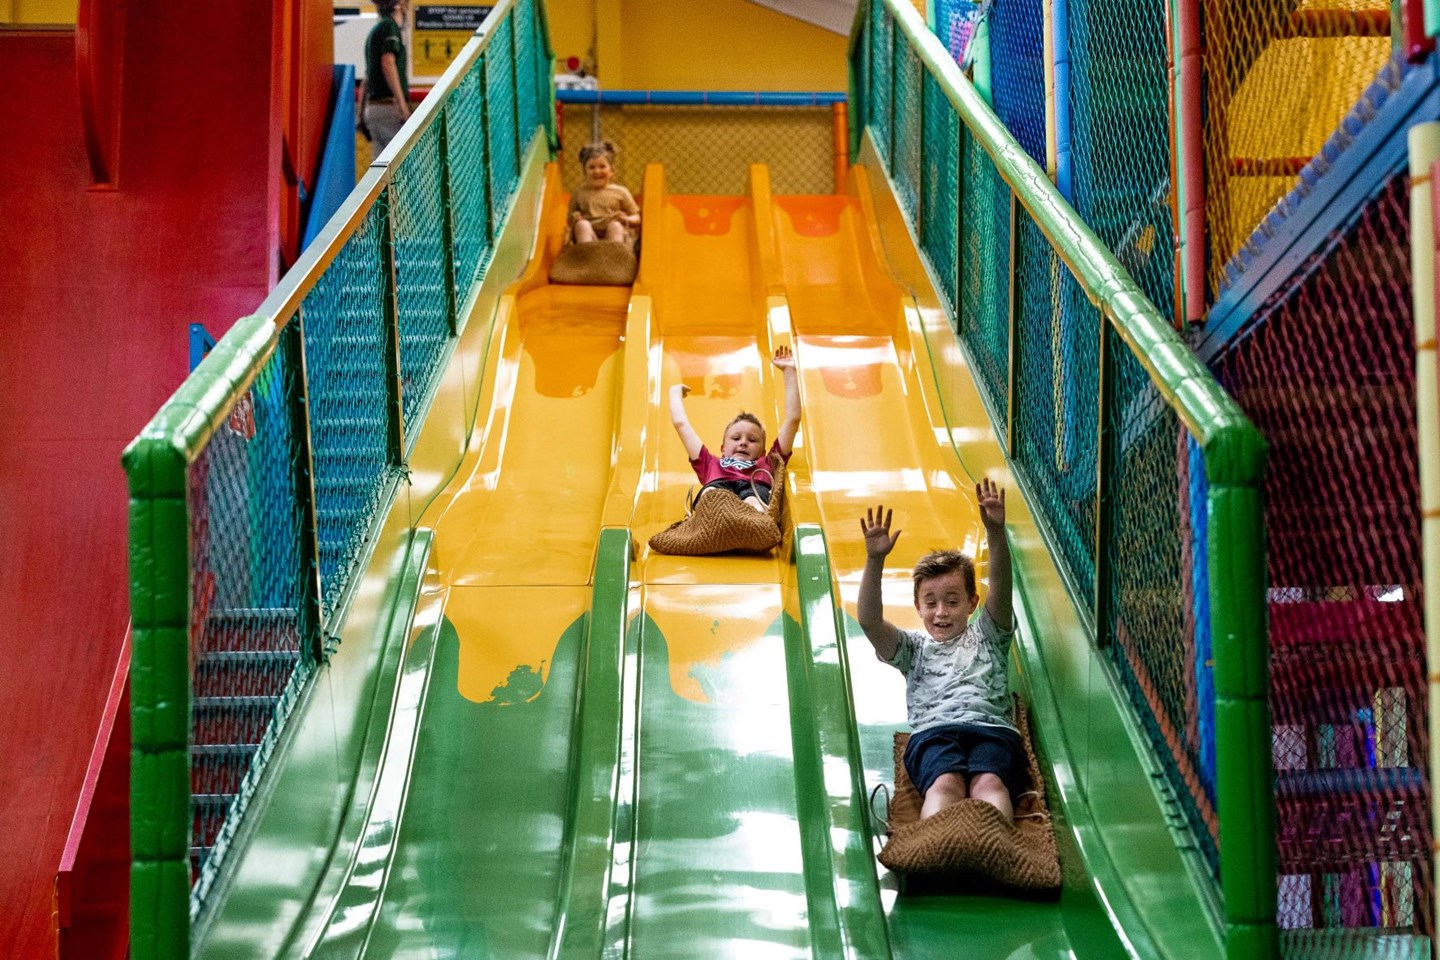 Image of children on slide in indoor play area mammoth play ark